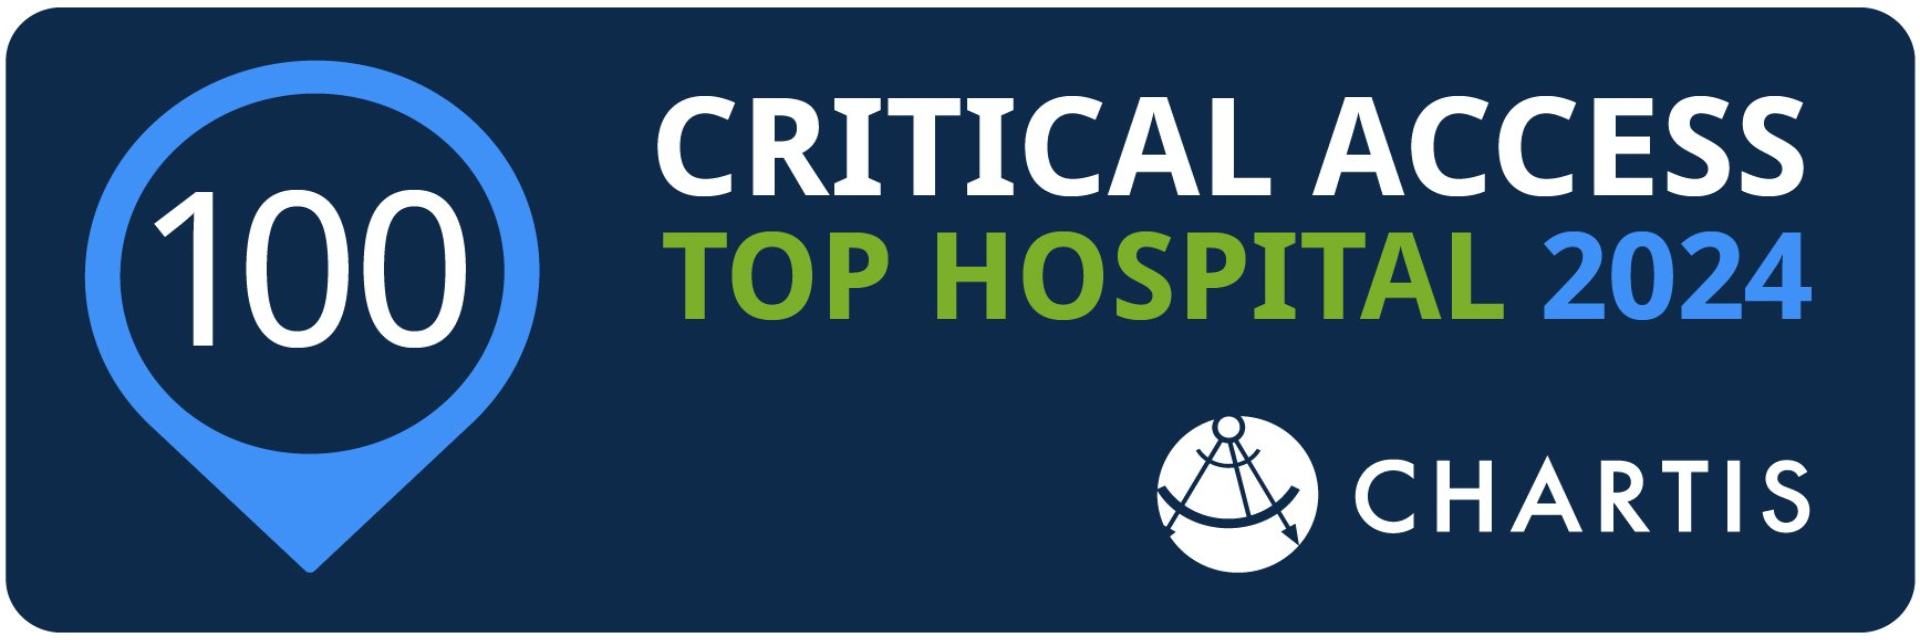 Critical Access Top Hospital 2024